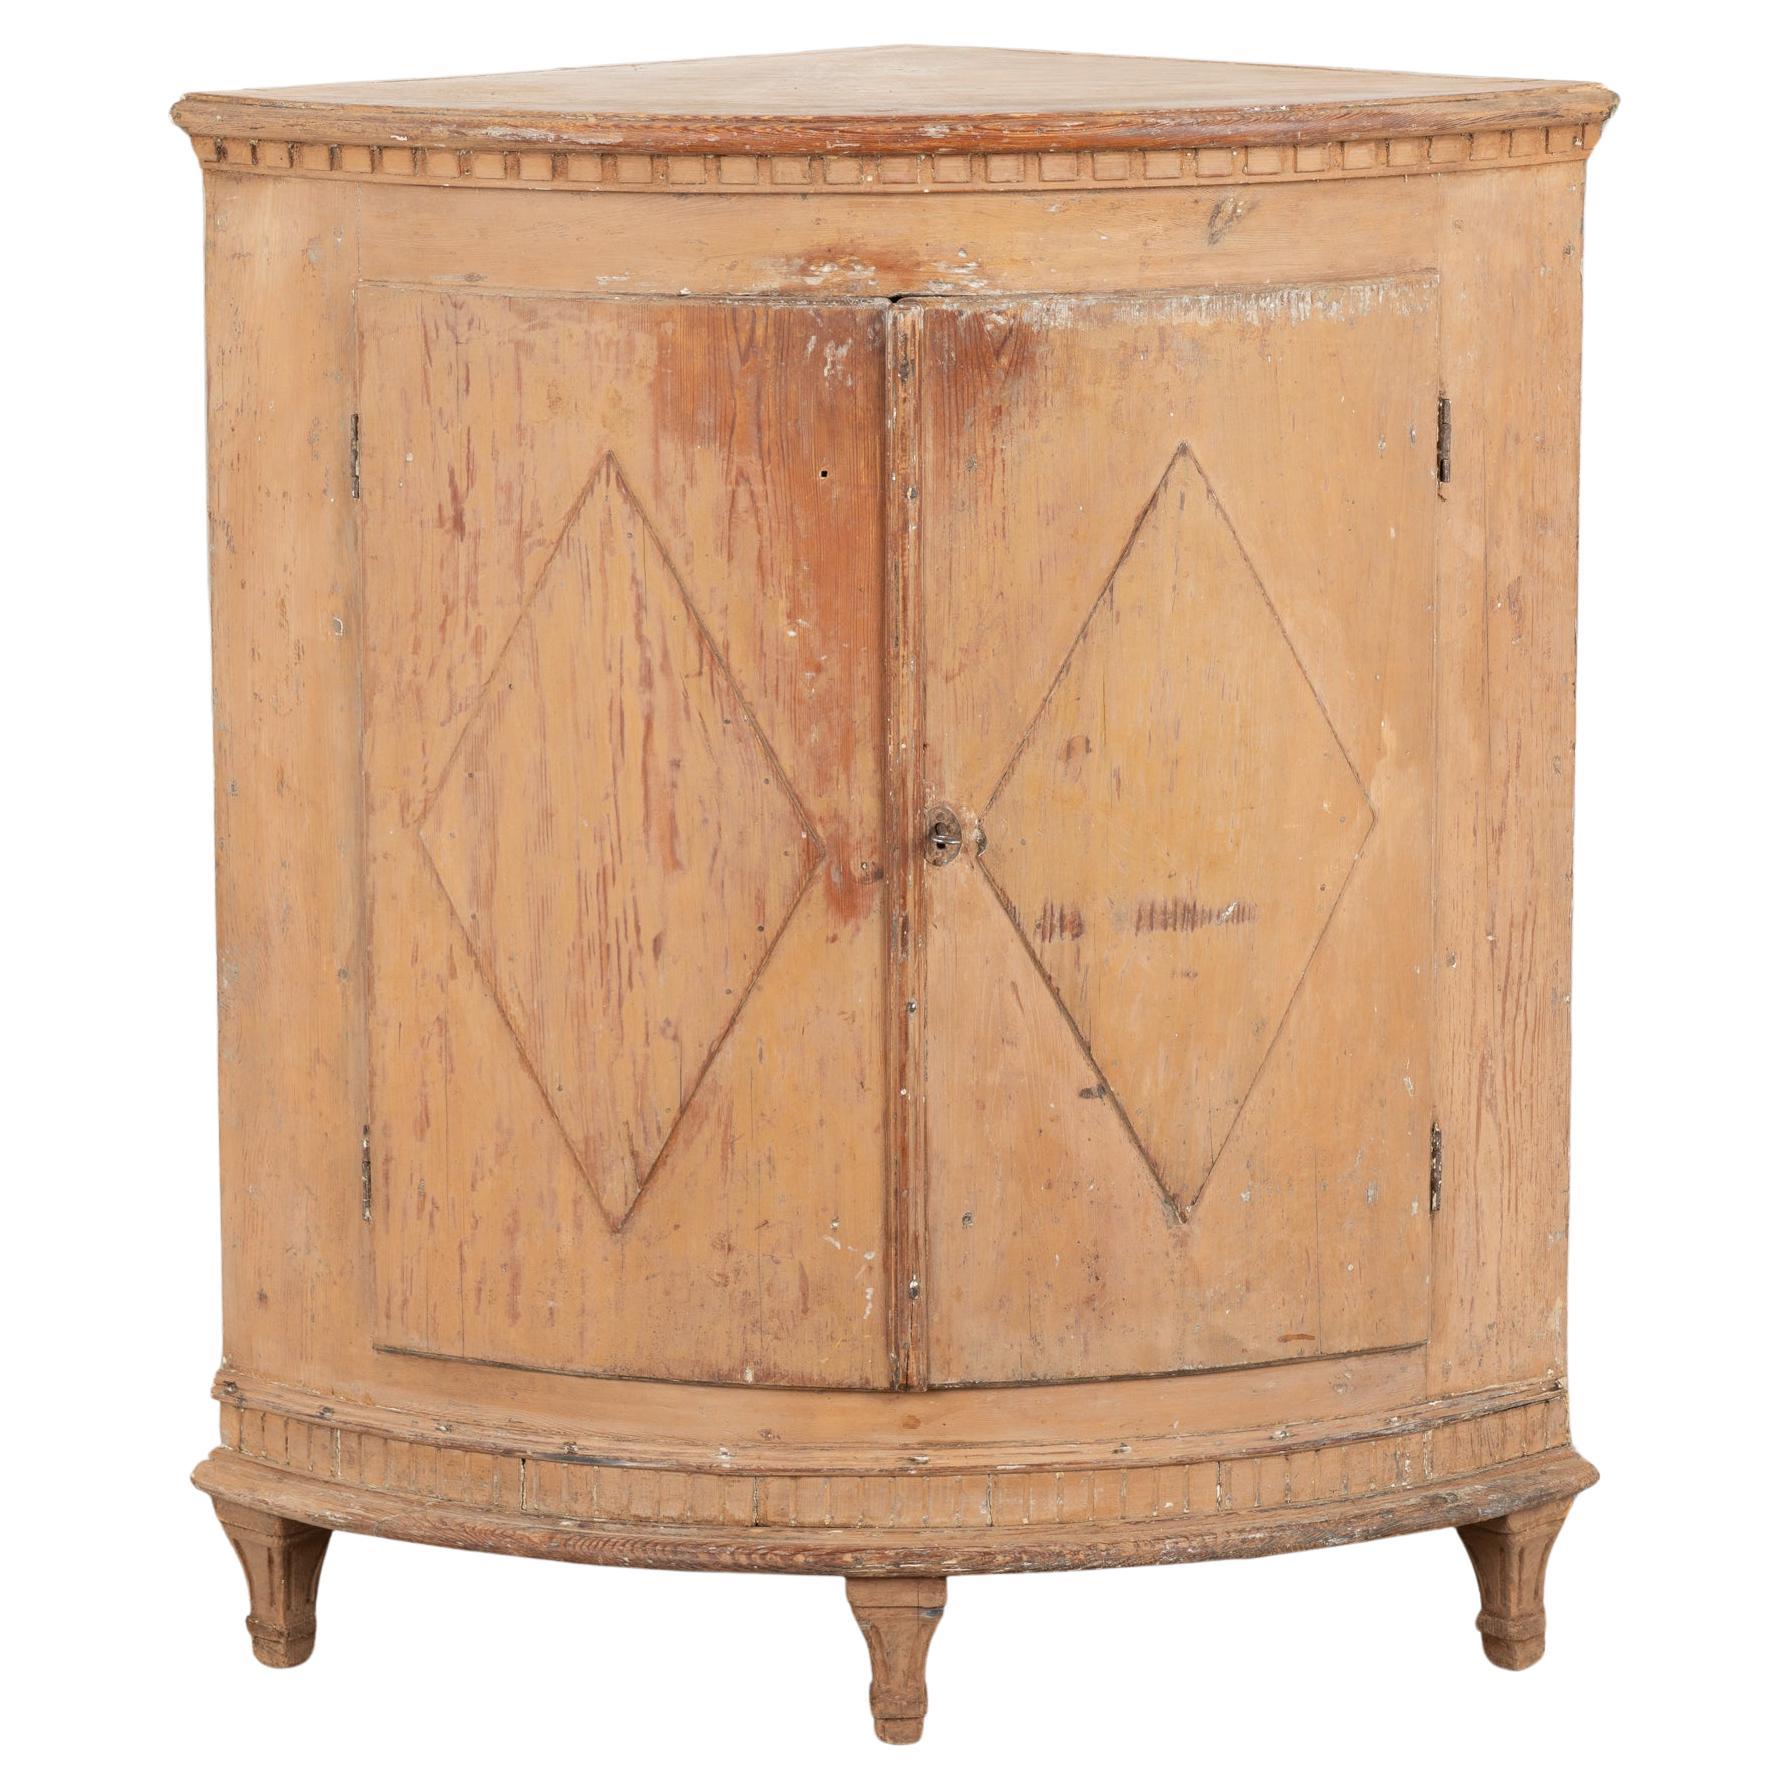 Original Painted Corner Cabinet from Sweden, circa 1820-40